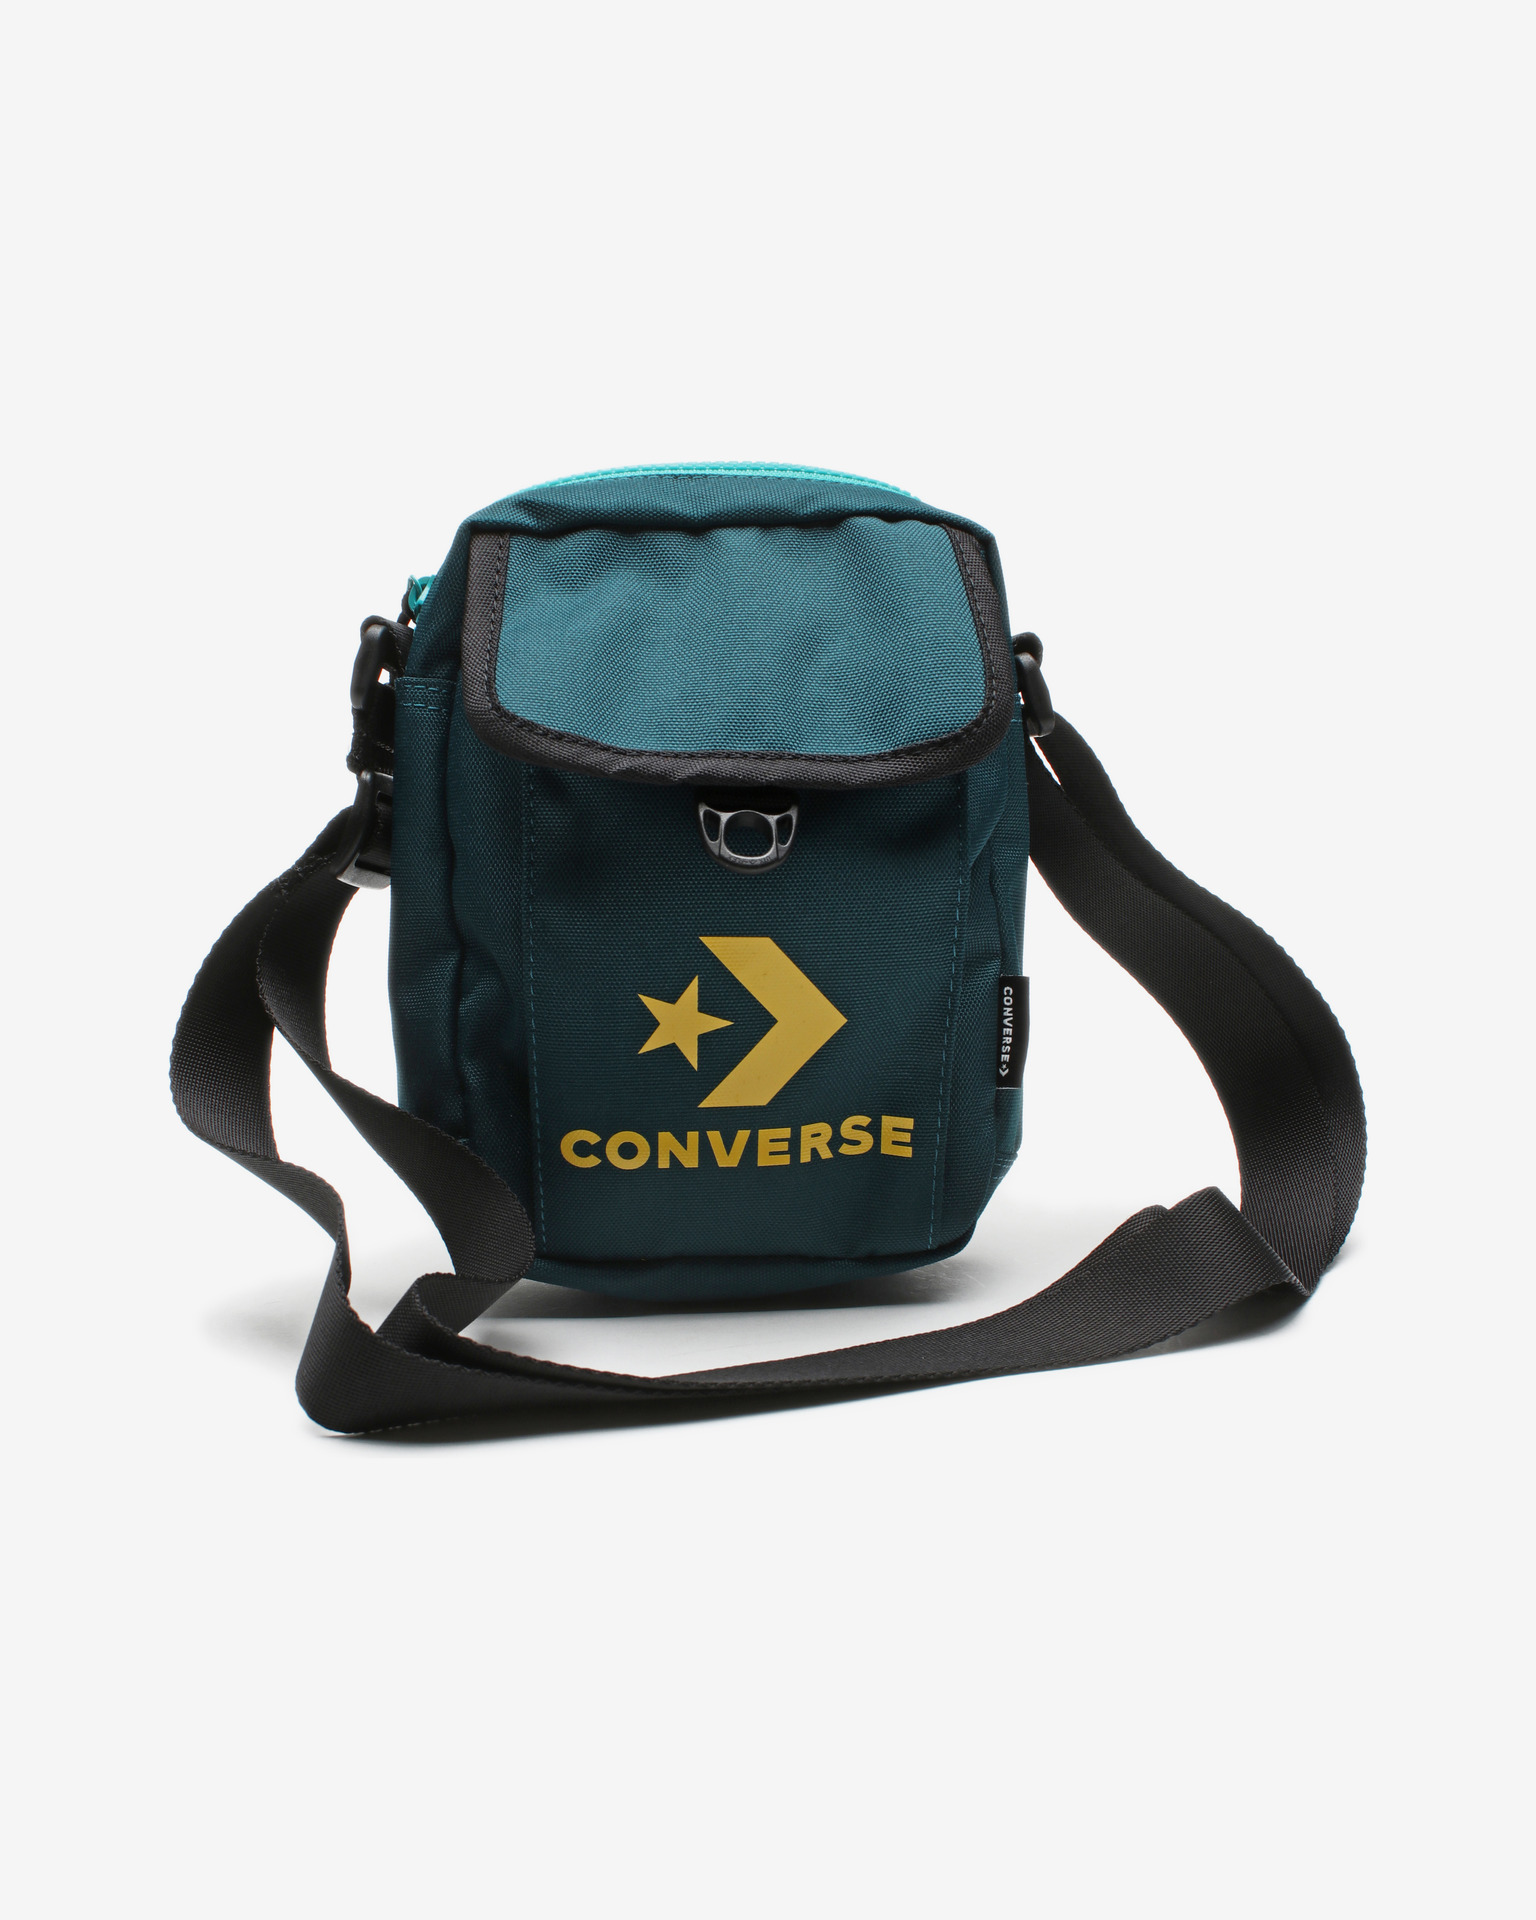 Manifiesto a tiempo Pasivo Converse - Cross body bag Bibloo.com